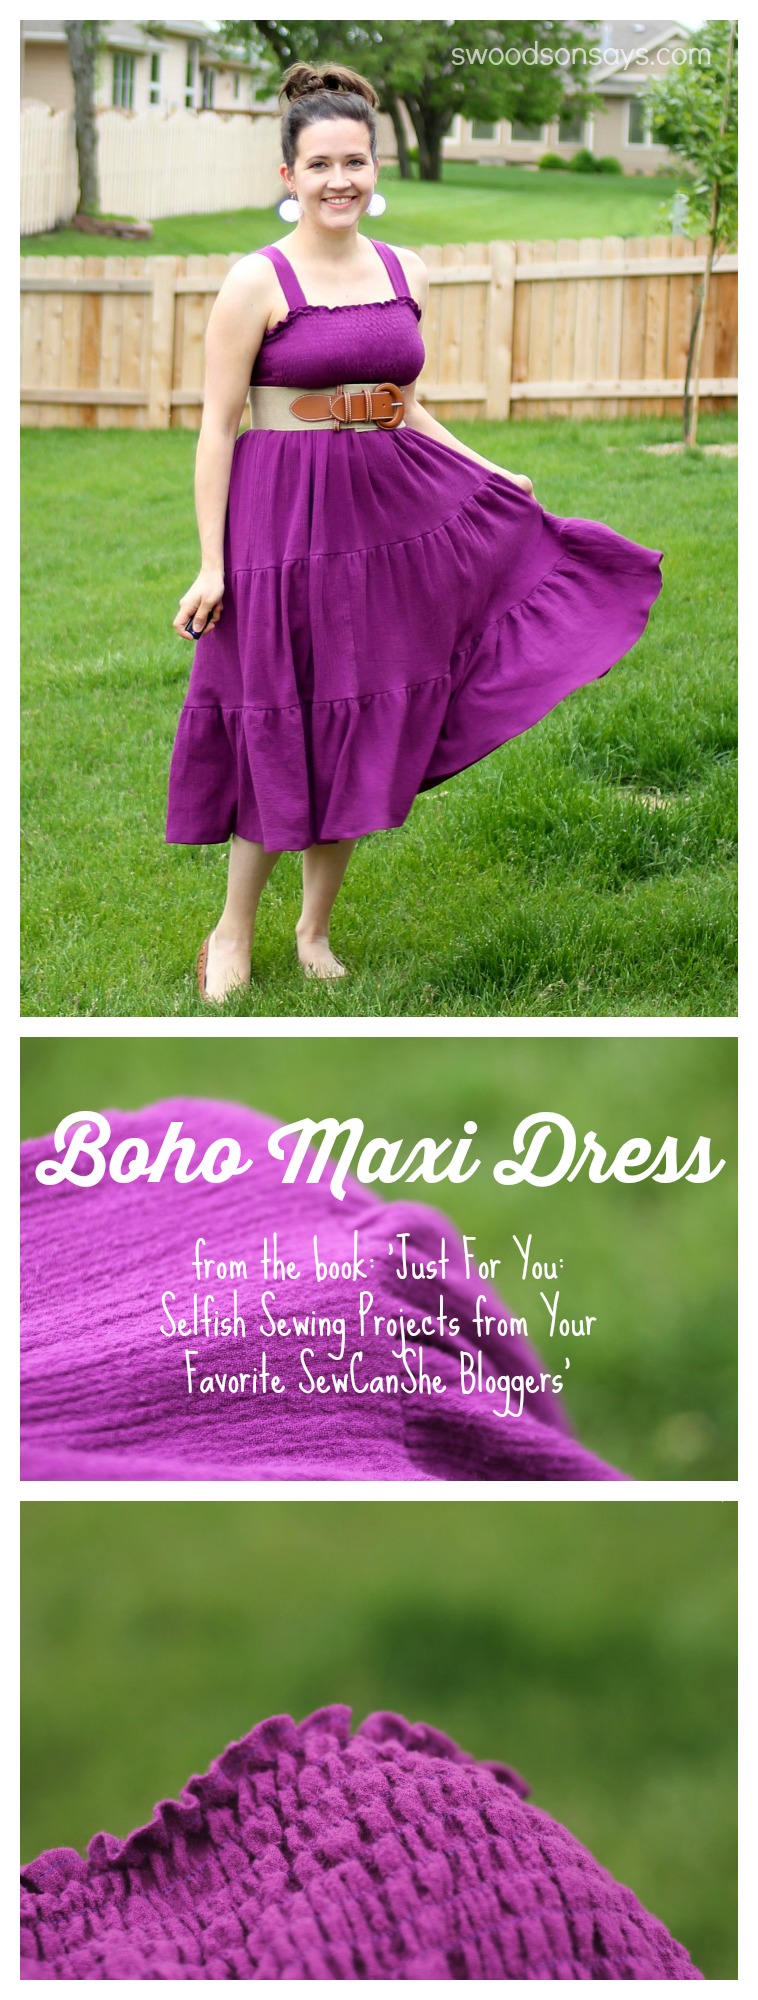 Boho Maxi Dress